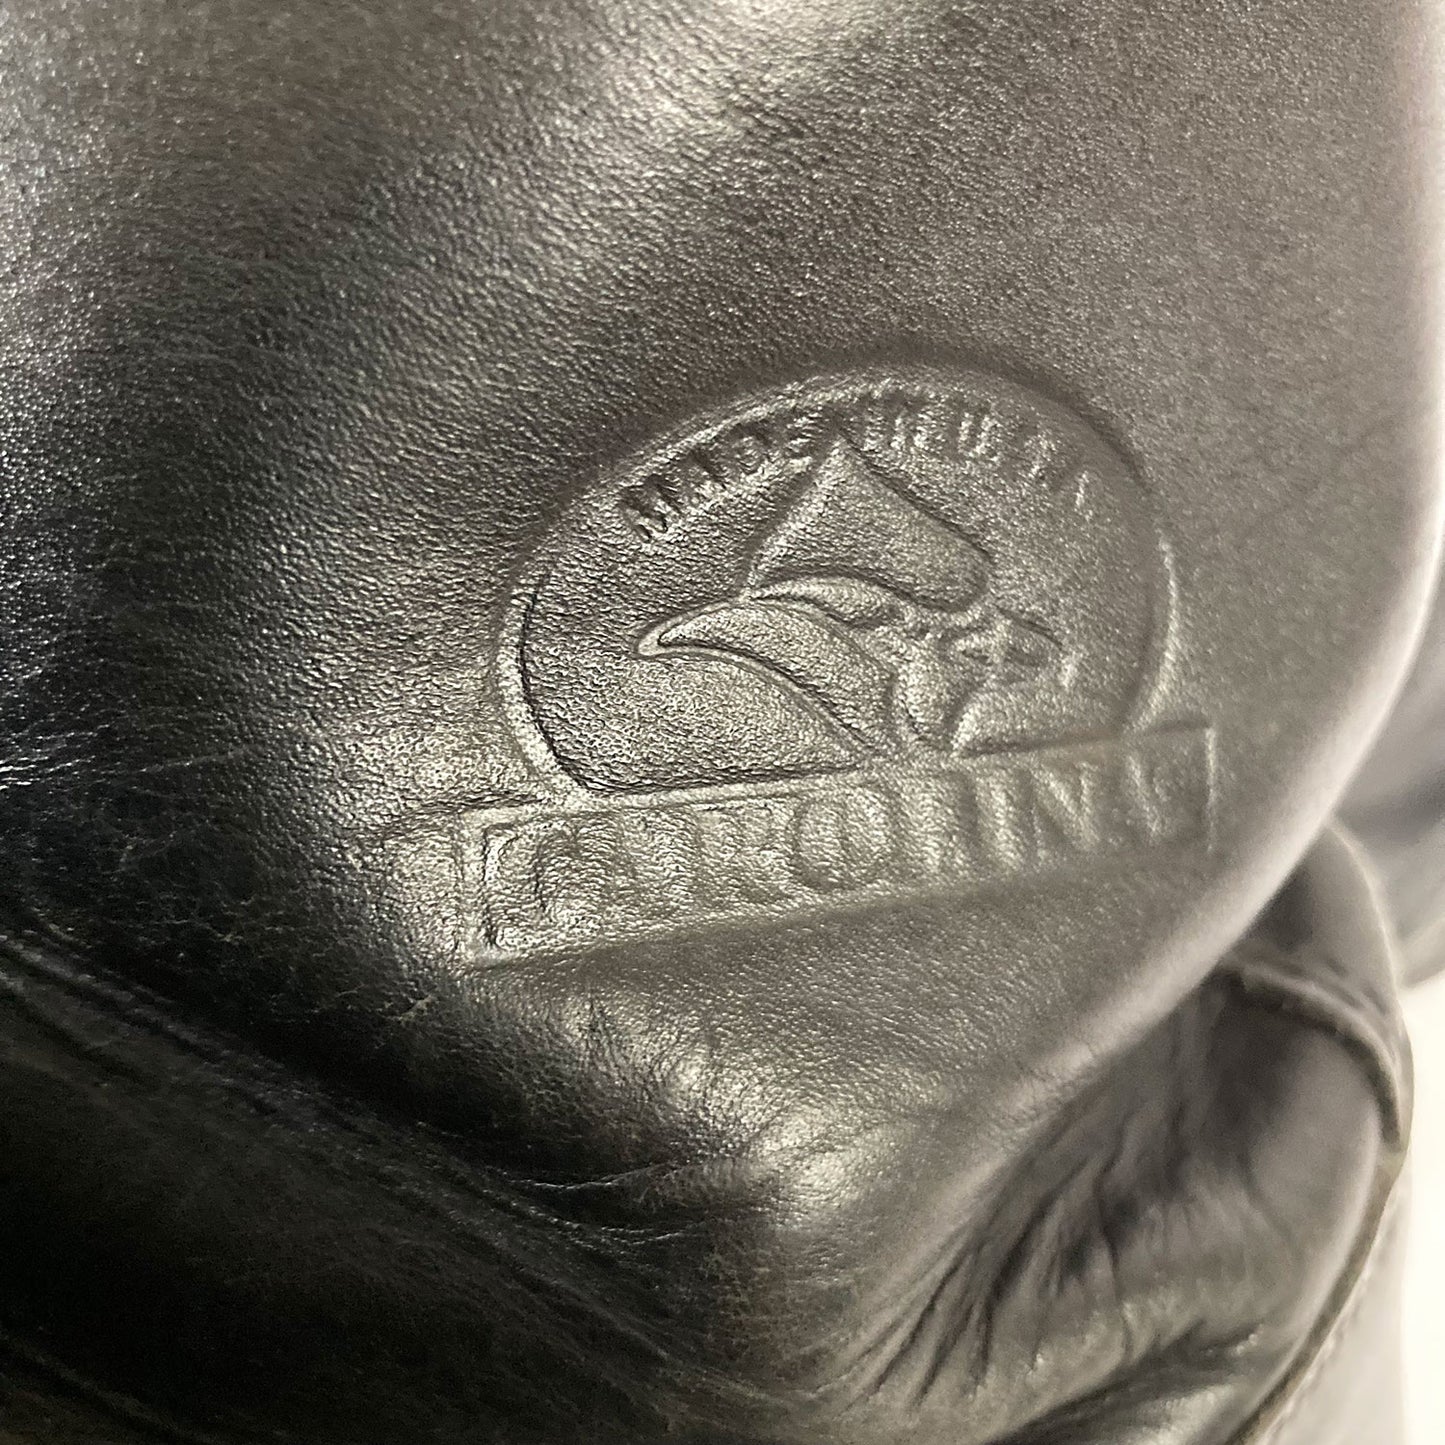 Carolina 902 soft toe leather engineer boots, made in the USA, US 9/UK 8